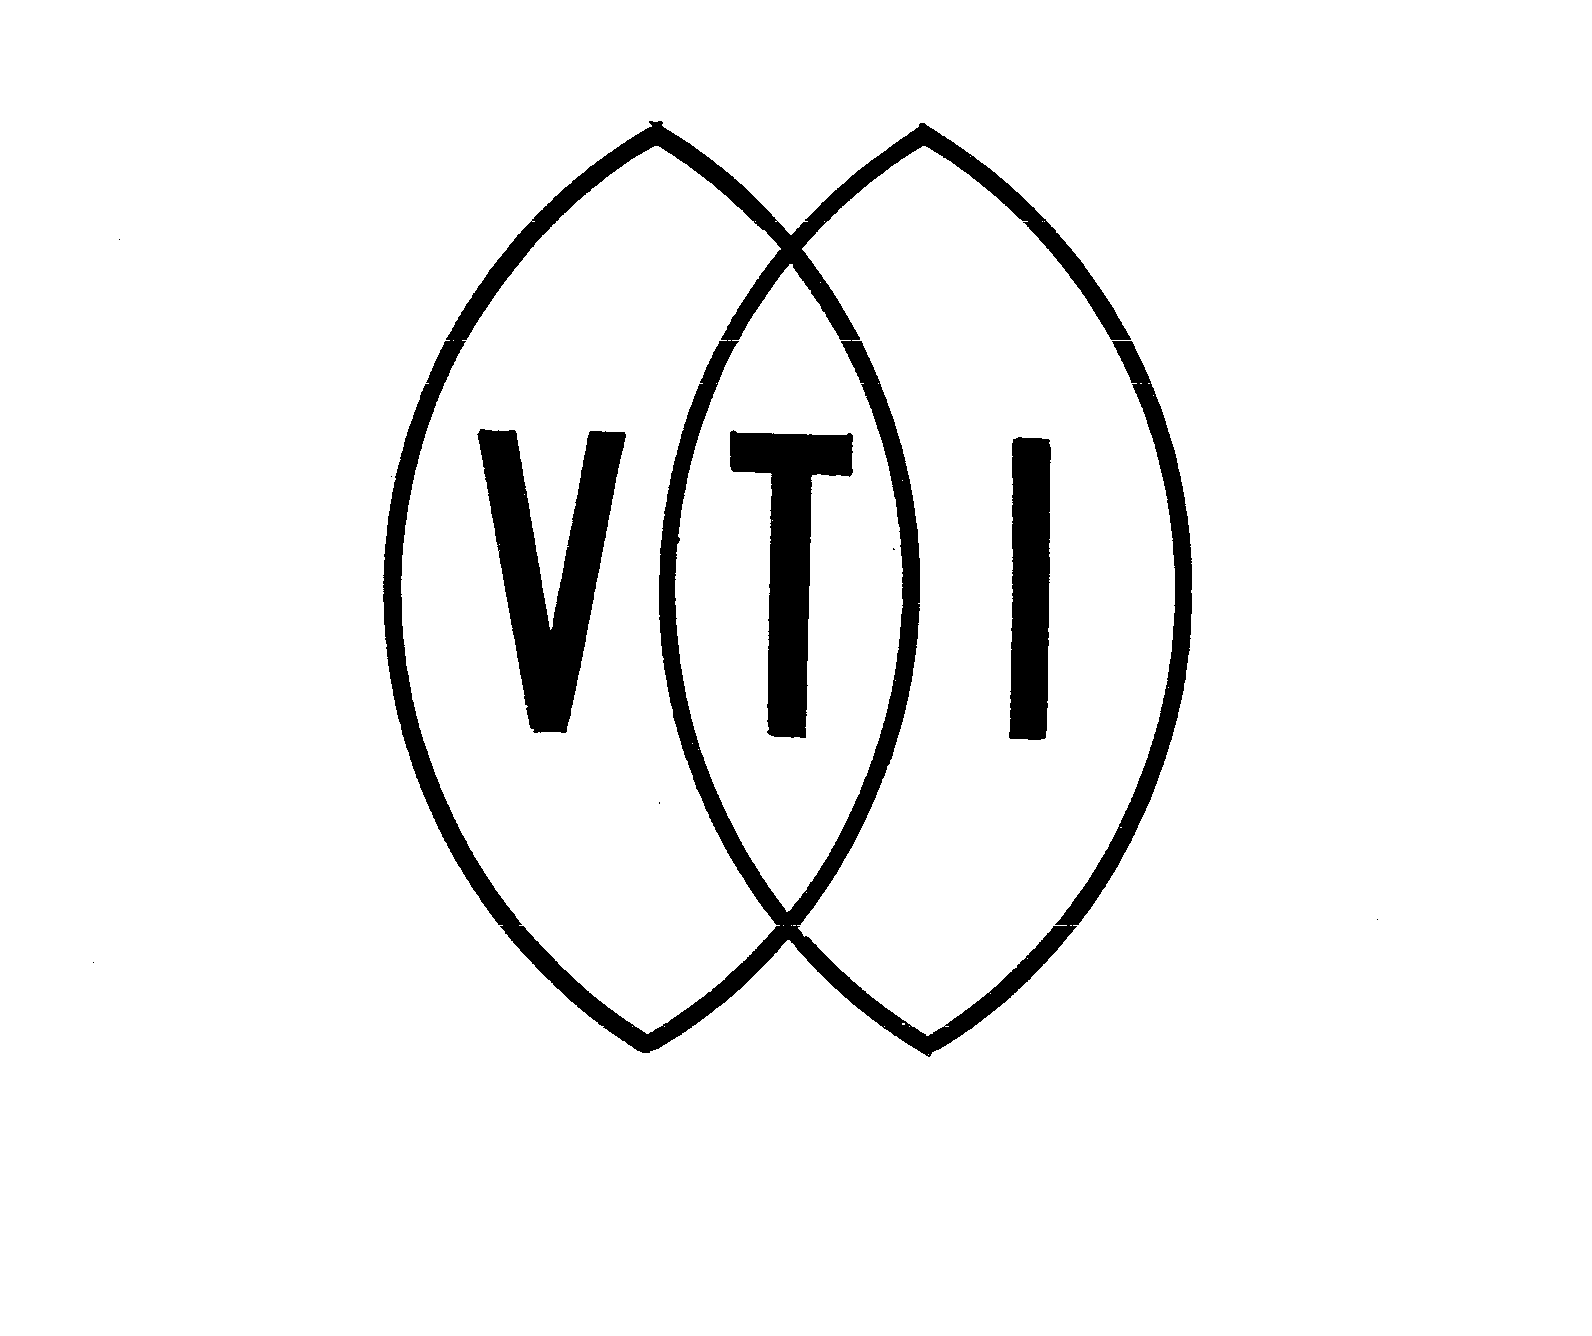 VTI